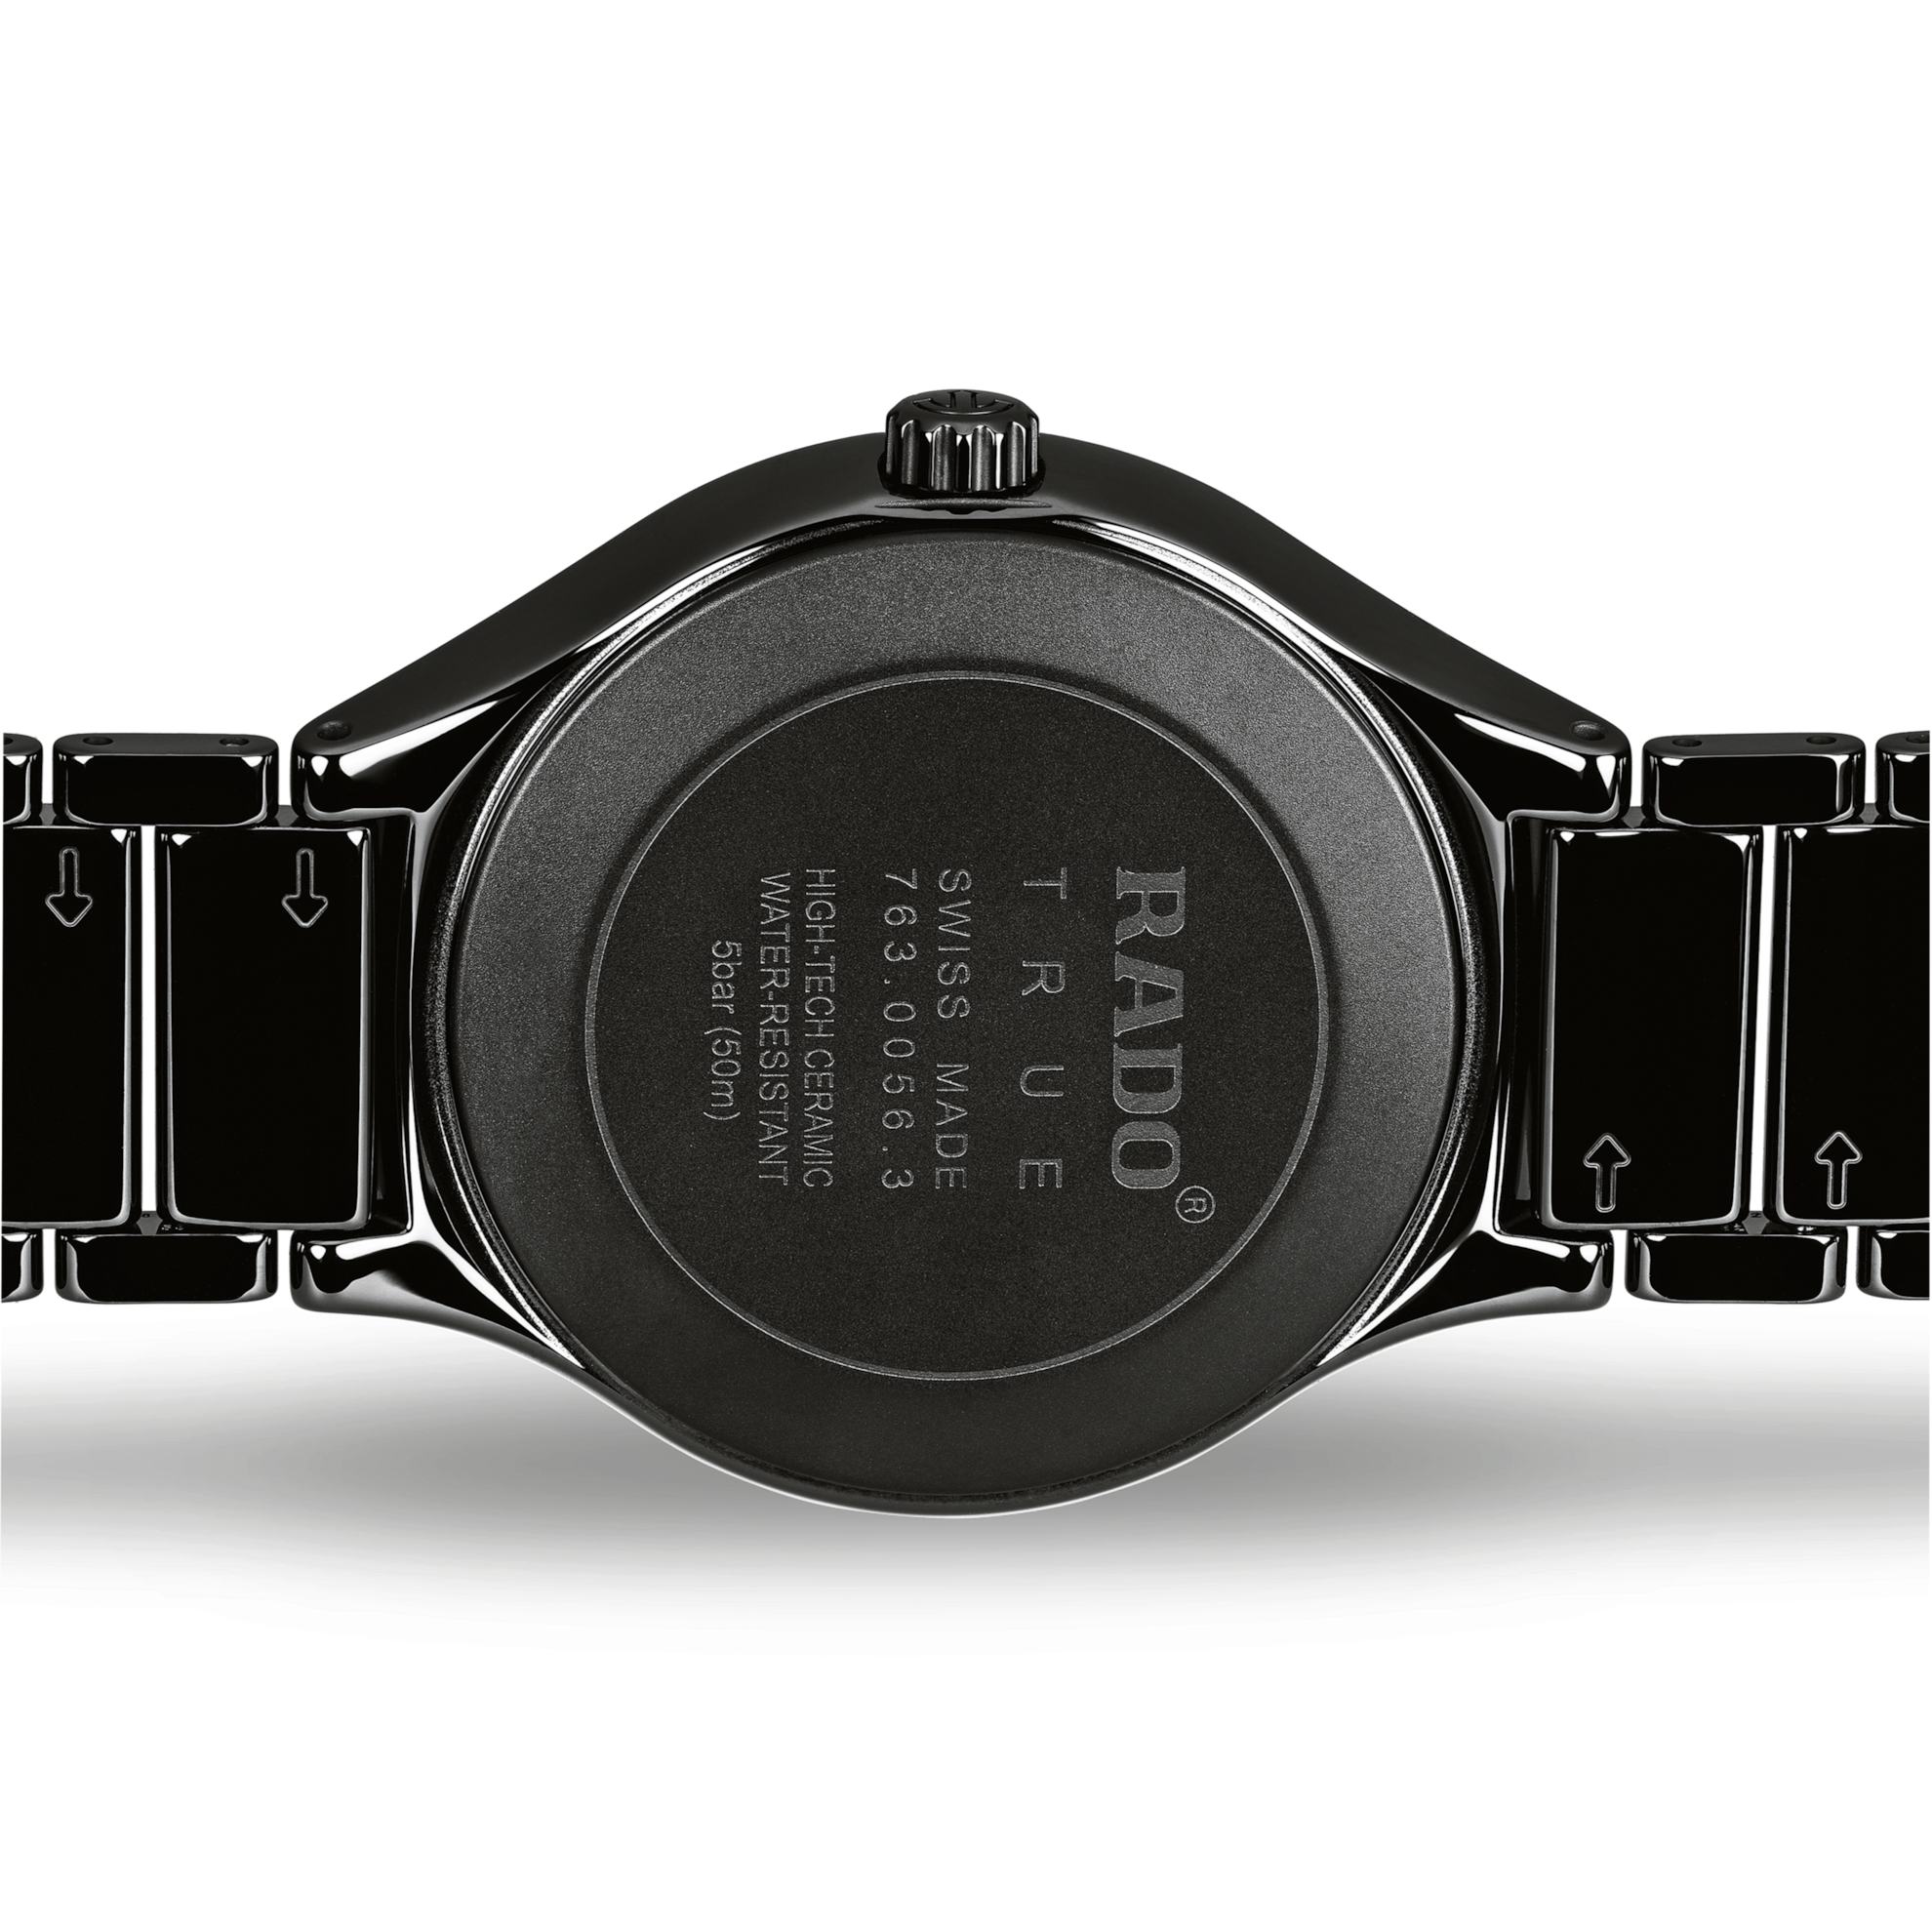 Rado True Black Dial Black Ceramic Watch For Men's - Kamal Watch Company